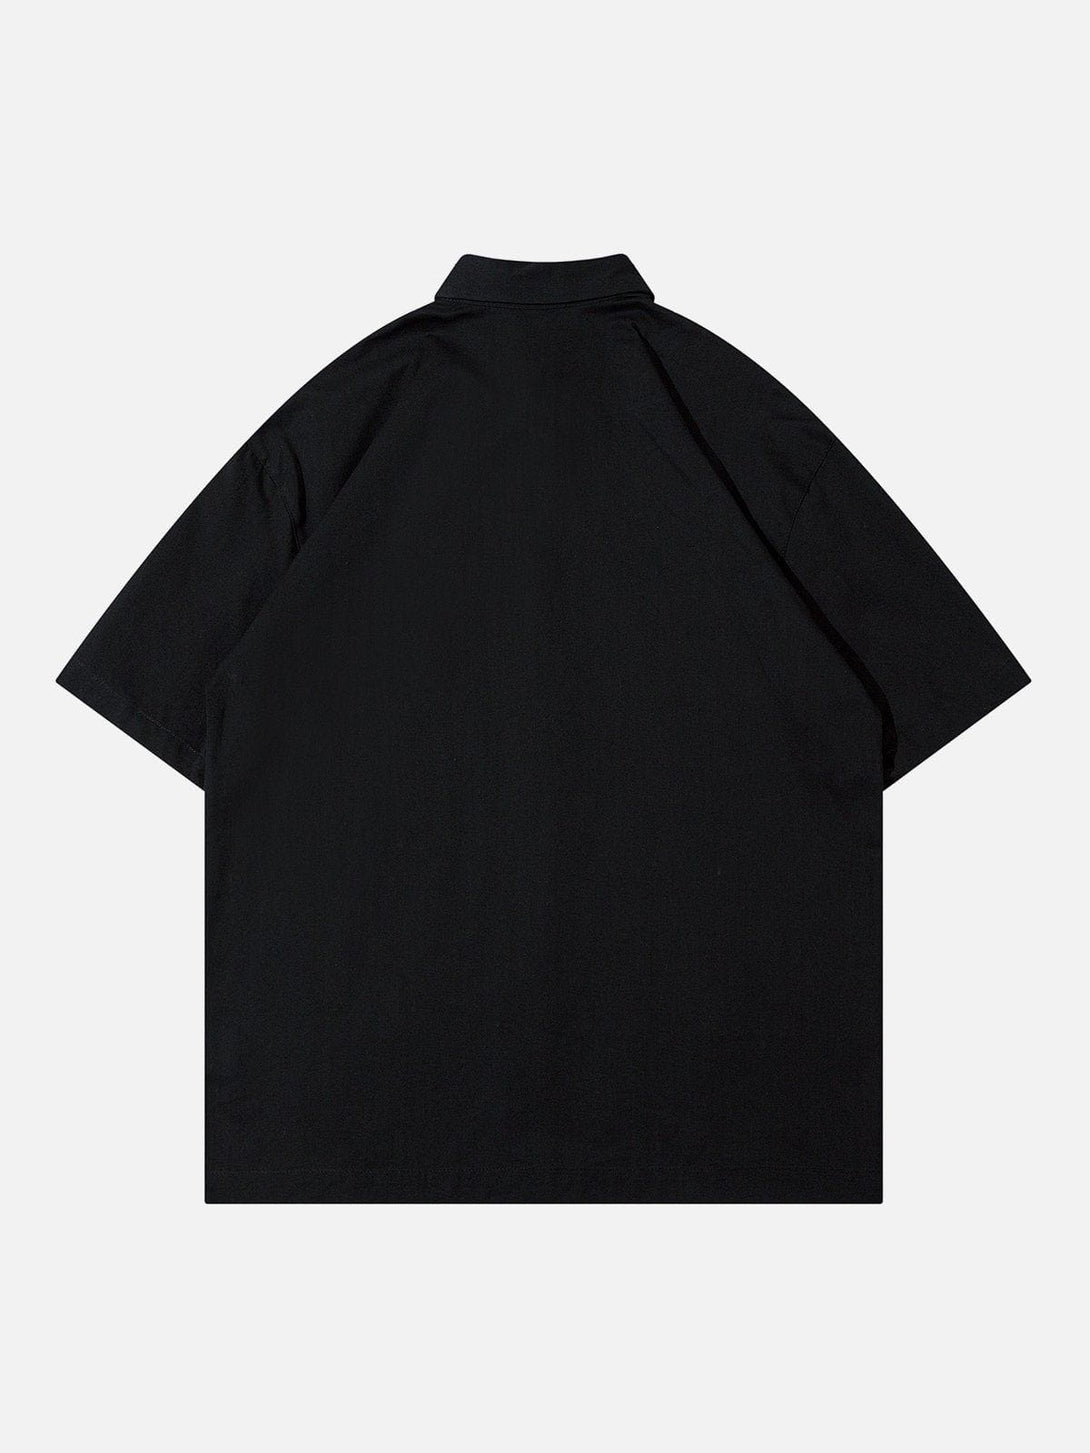 Majesda® - Flame Dart Graphic Short Sleeve Shirts outfit ideas streetwear fashion